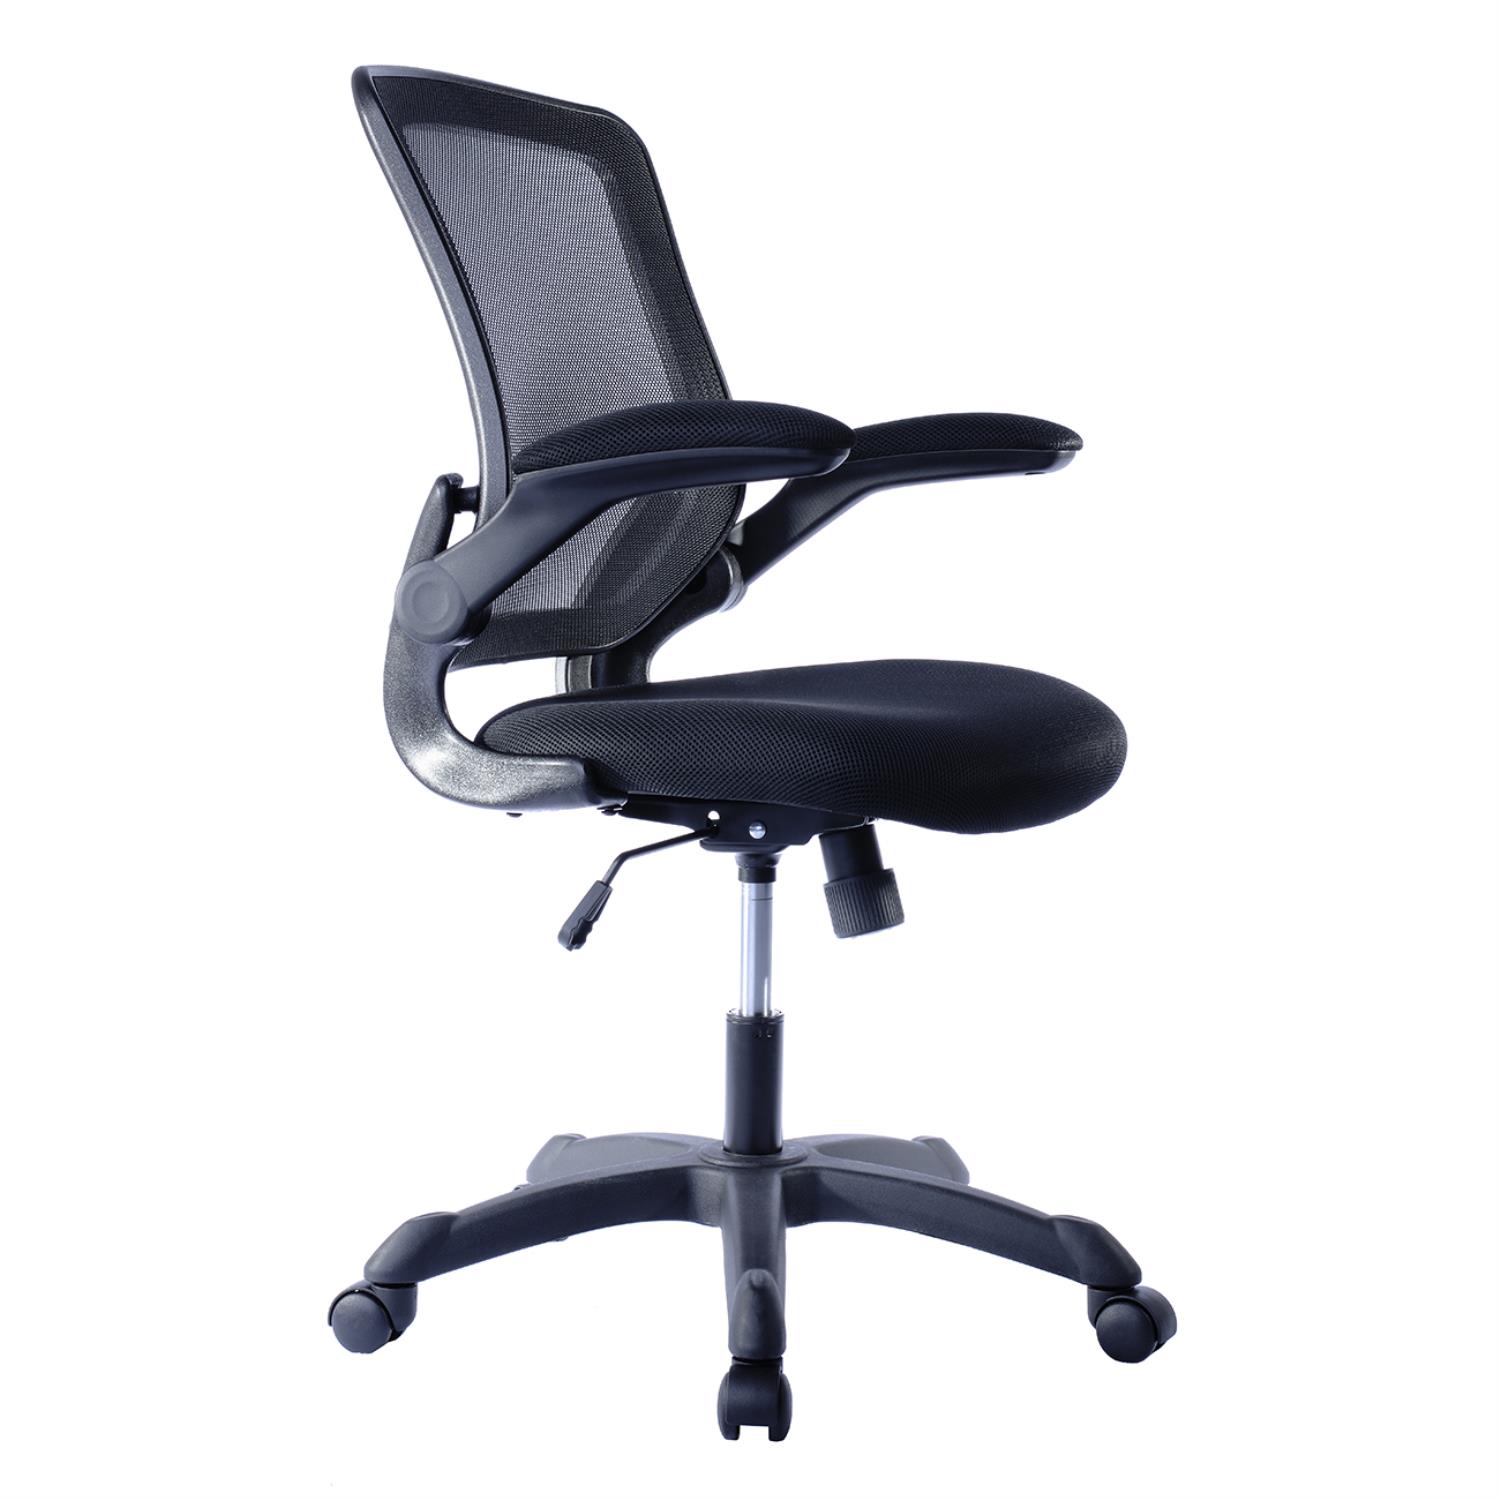 RTA Products Techni Mobili RTA-8050-BK Techni Mobili Mesh Task Chair with Flip-Up Arms - Black